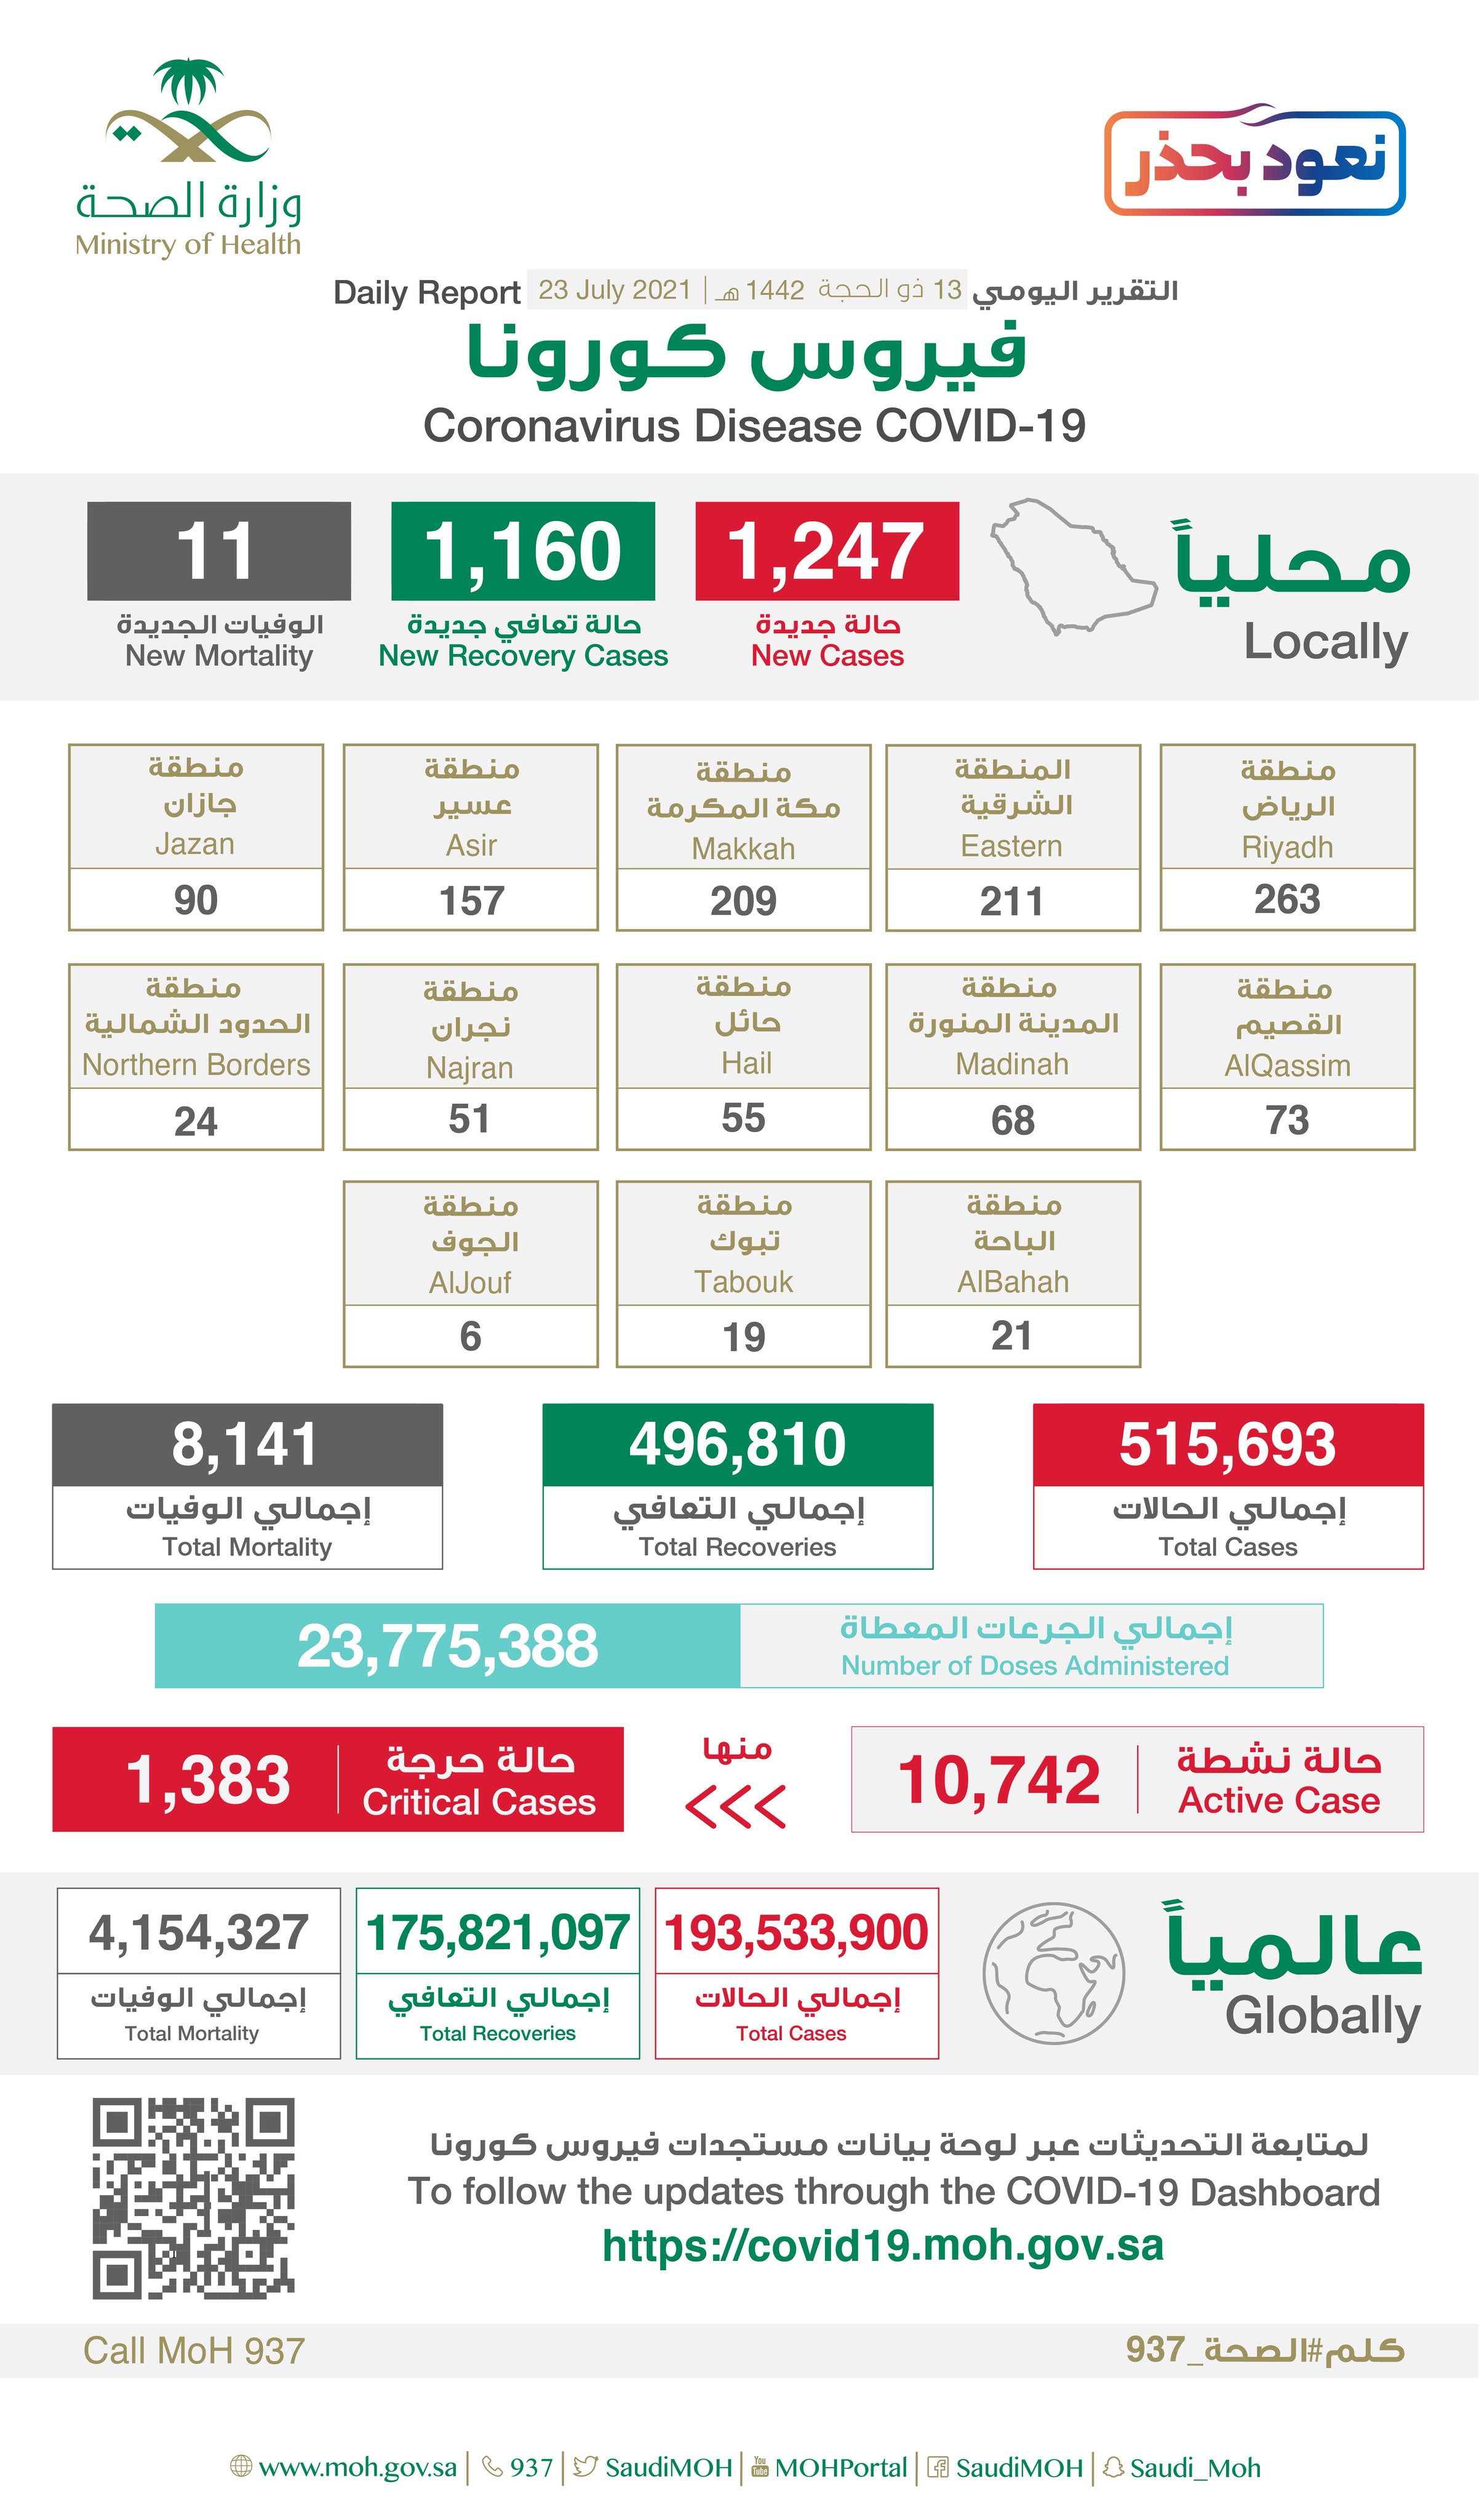 Saudi Arabia Coronavirus : Total Cases : 515,693 , New Cases :1,247, Cured : 496,810 , Deaths: 8,141 , Active Cases : 10,742